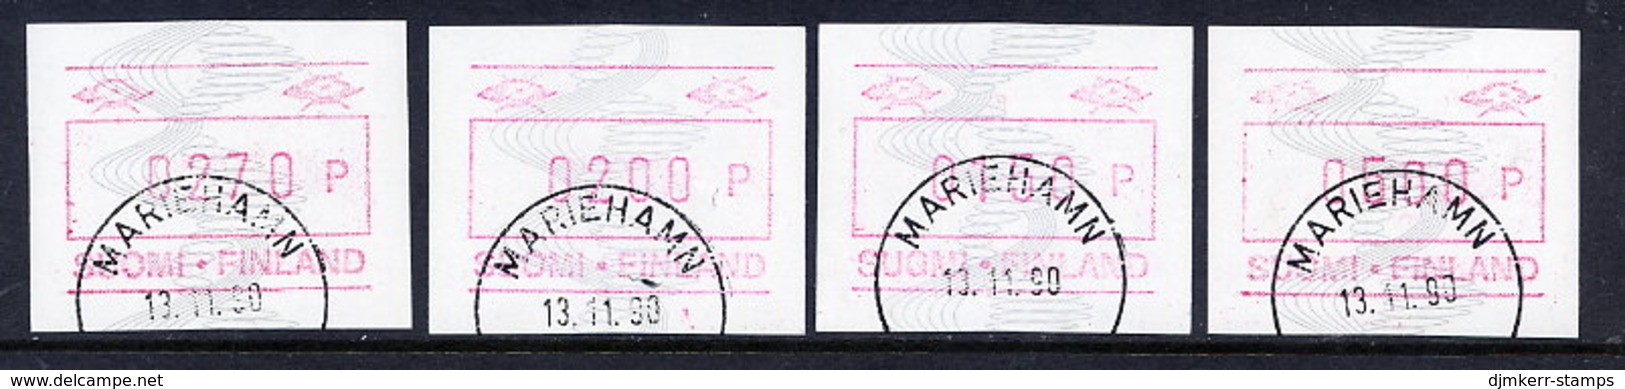 FINLAND 1990 Definitive Without ATM Number , 4 Different Values Used.  Michel 7 - Viñetas De Franqueo [ATM]